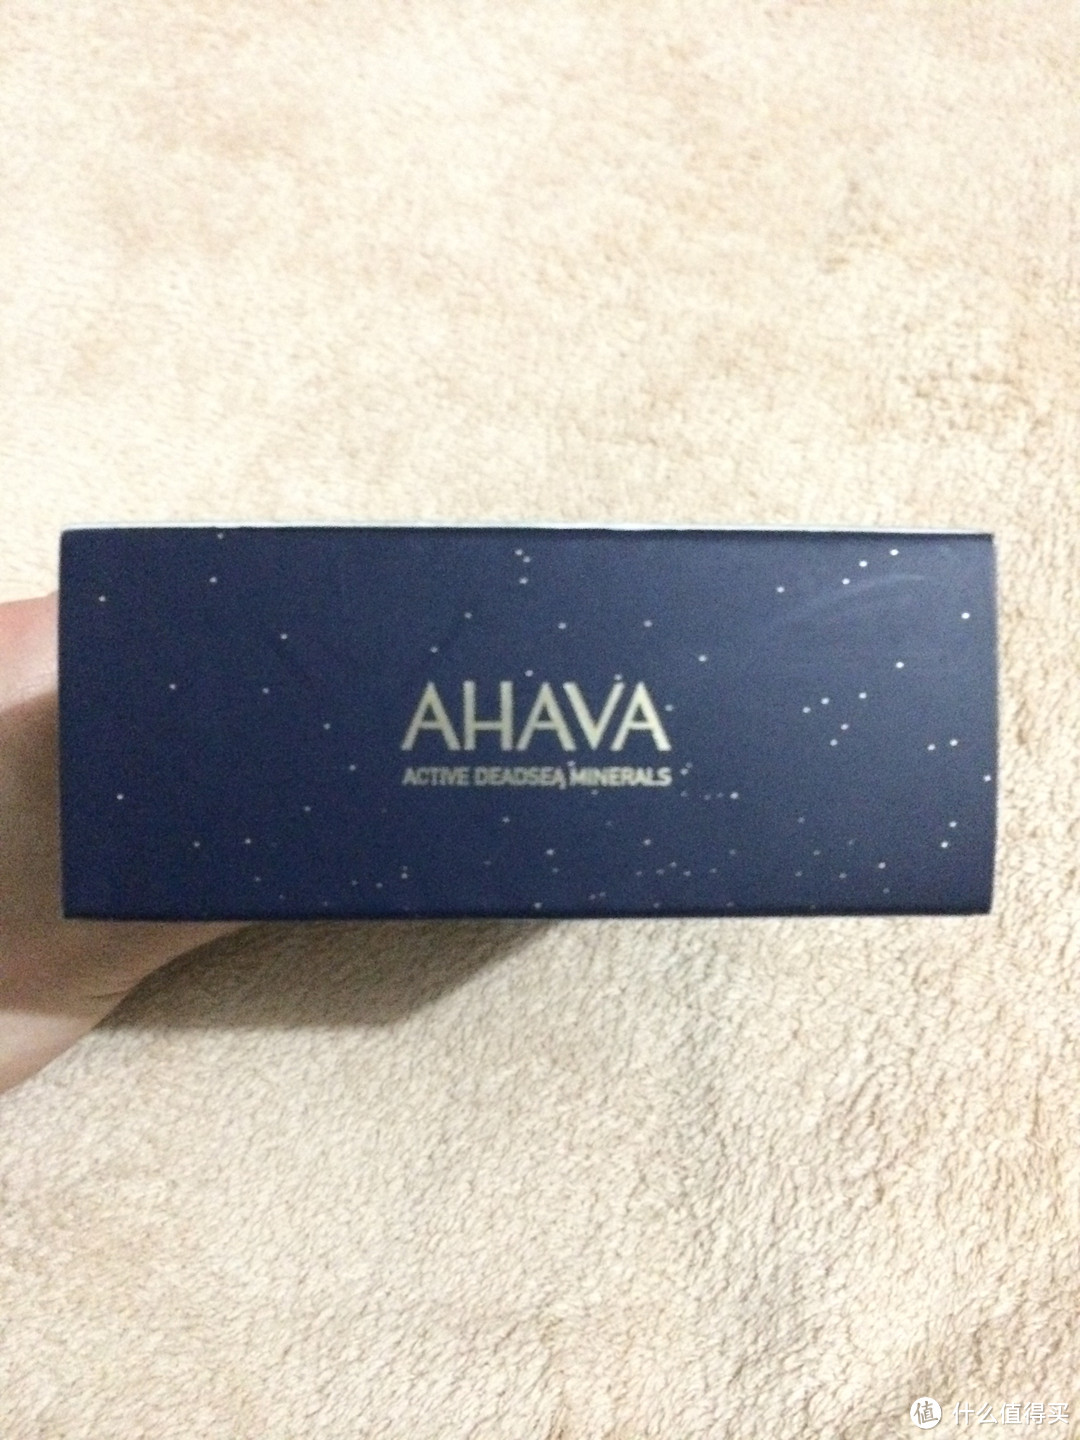 AHAVA 死海矿物质护肤品 + 碧欧泉全效保湿修复霜